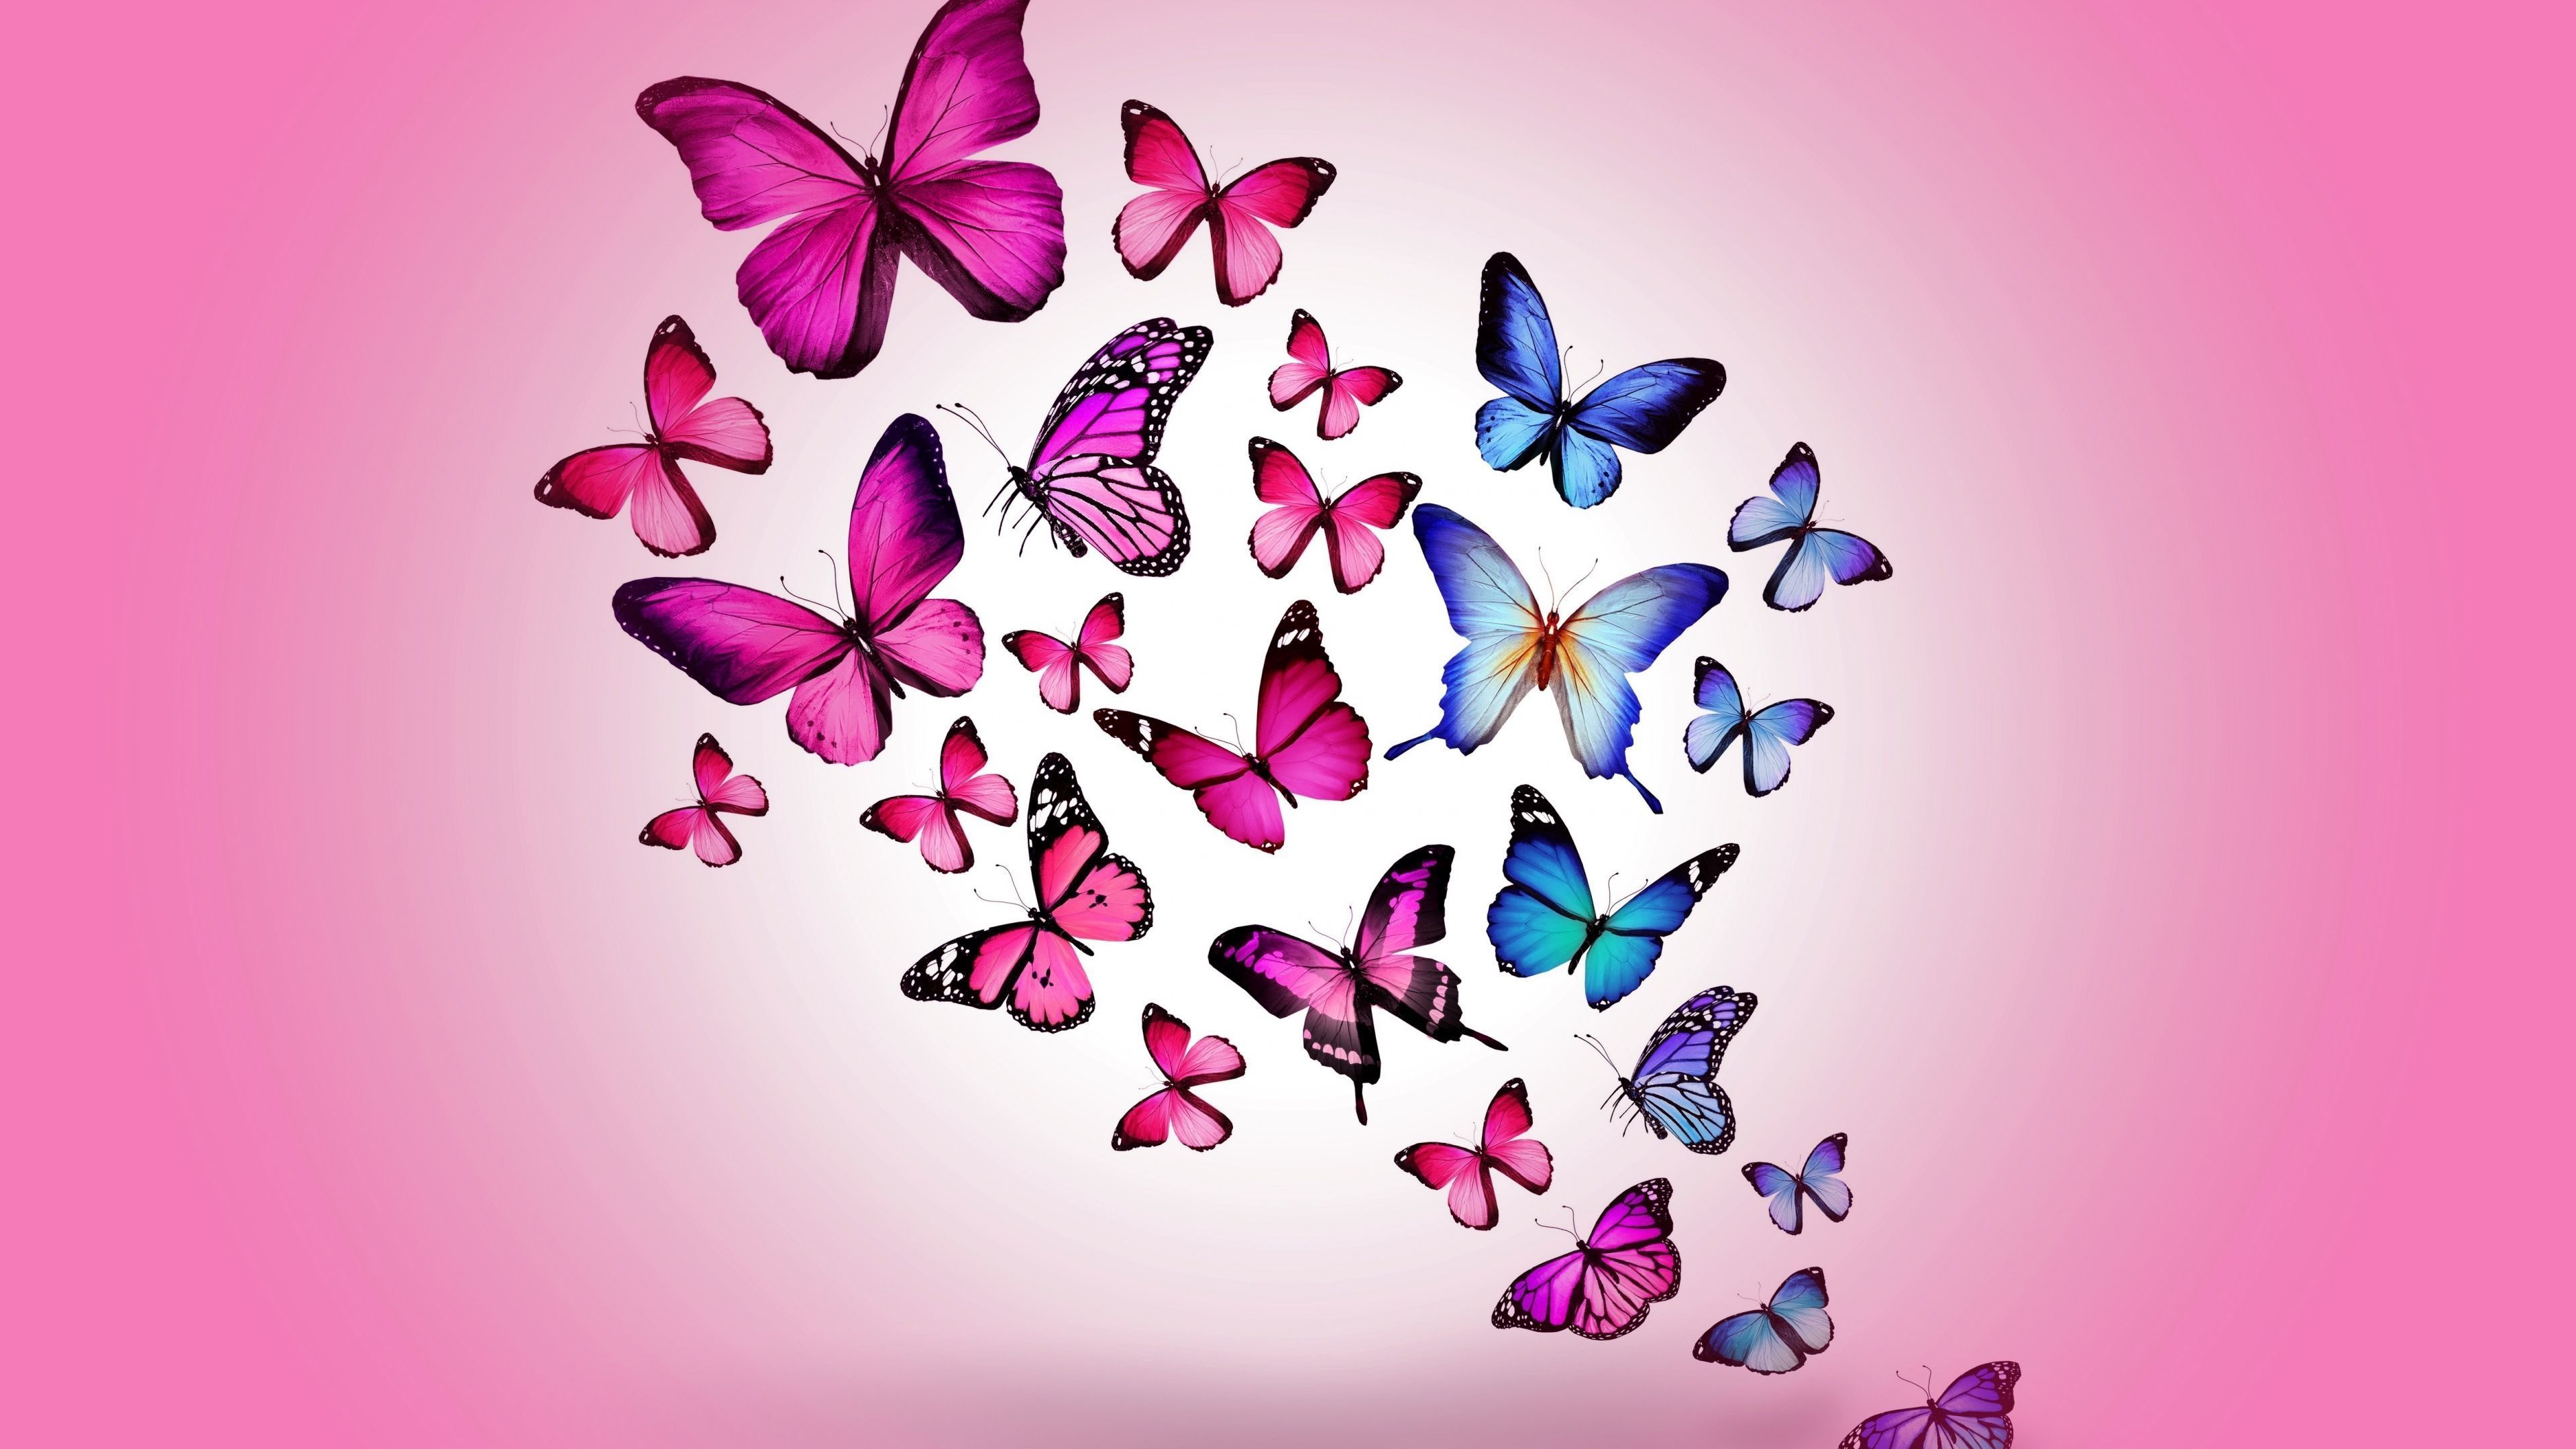 Cute Aesthetic Pink Butterfly Wallpaper